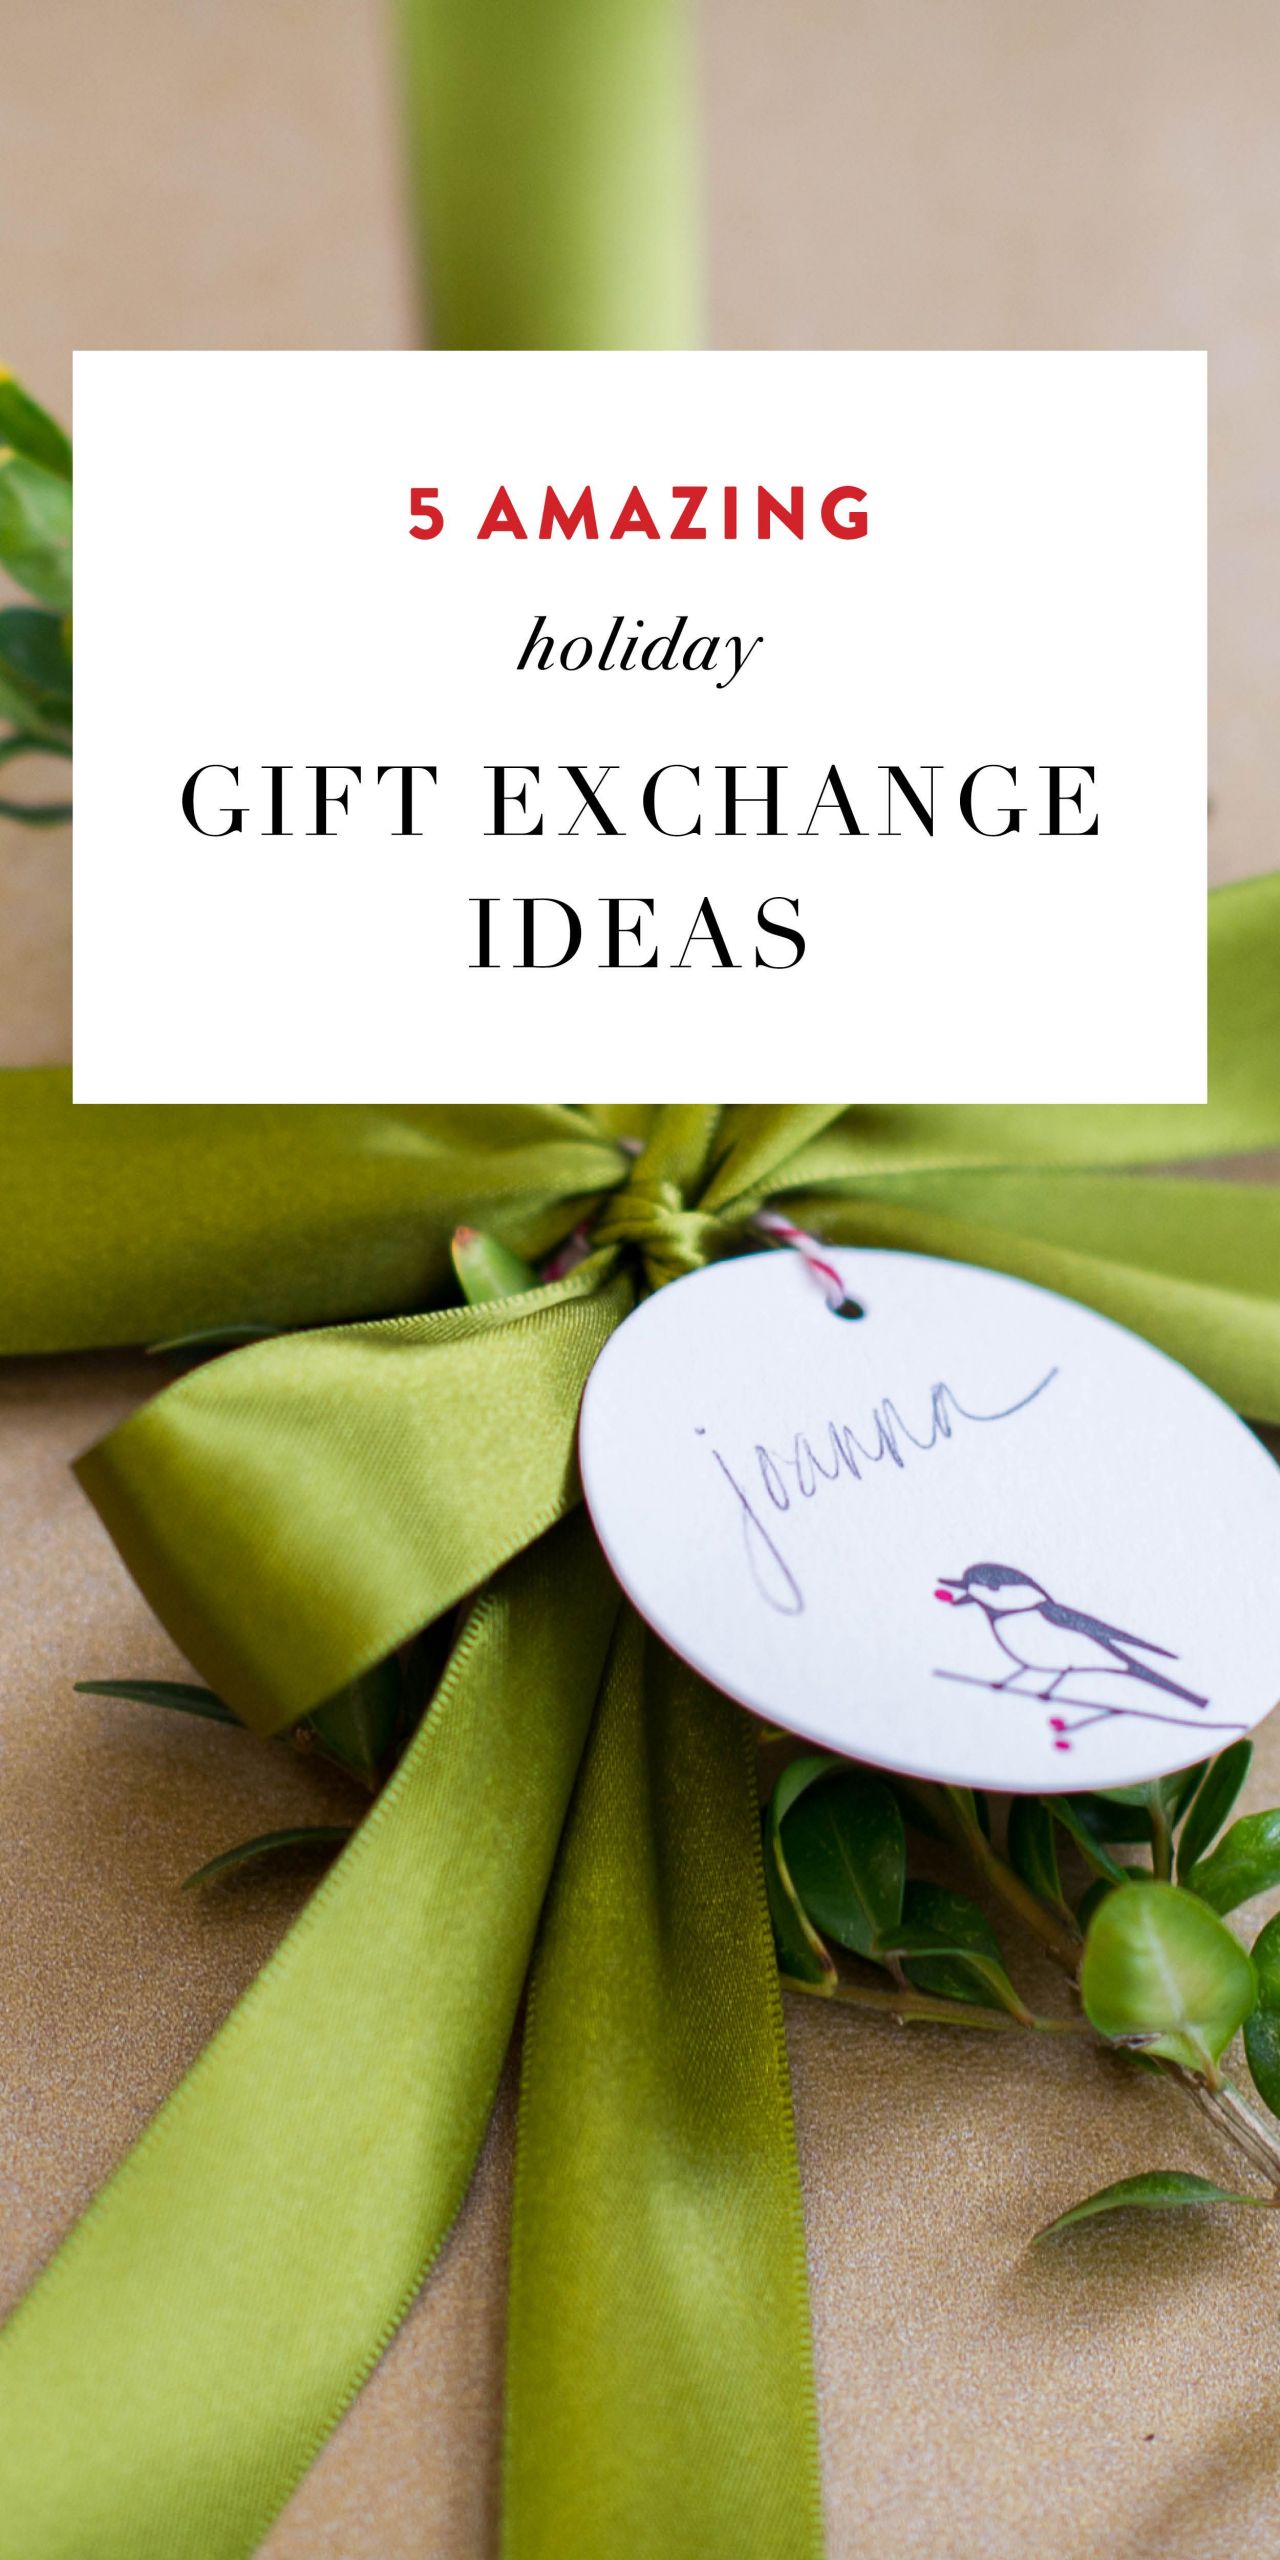 Holiday Family Gift Exchange Ideas
 5 Amazing Holiday Gift Exchange Ideas